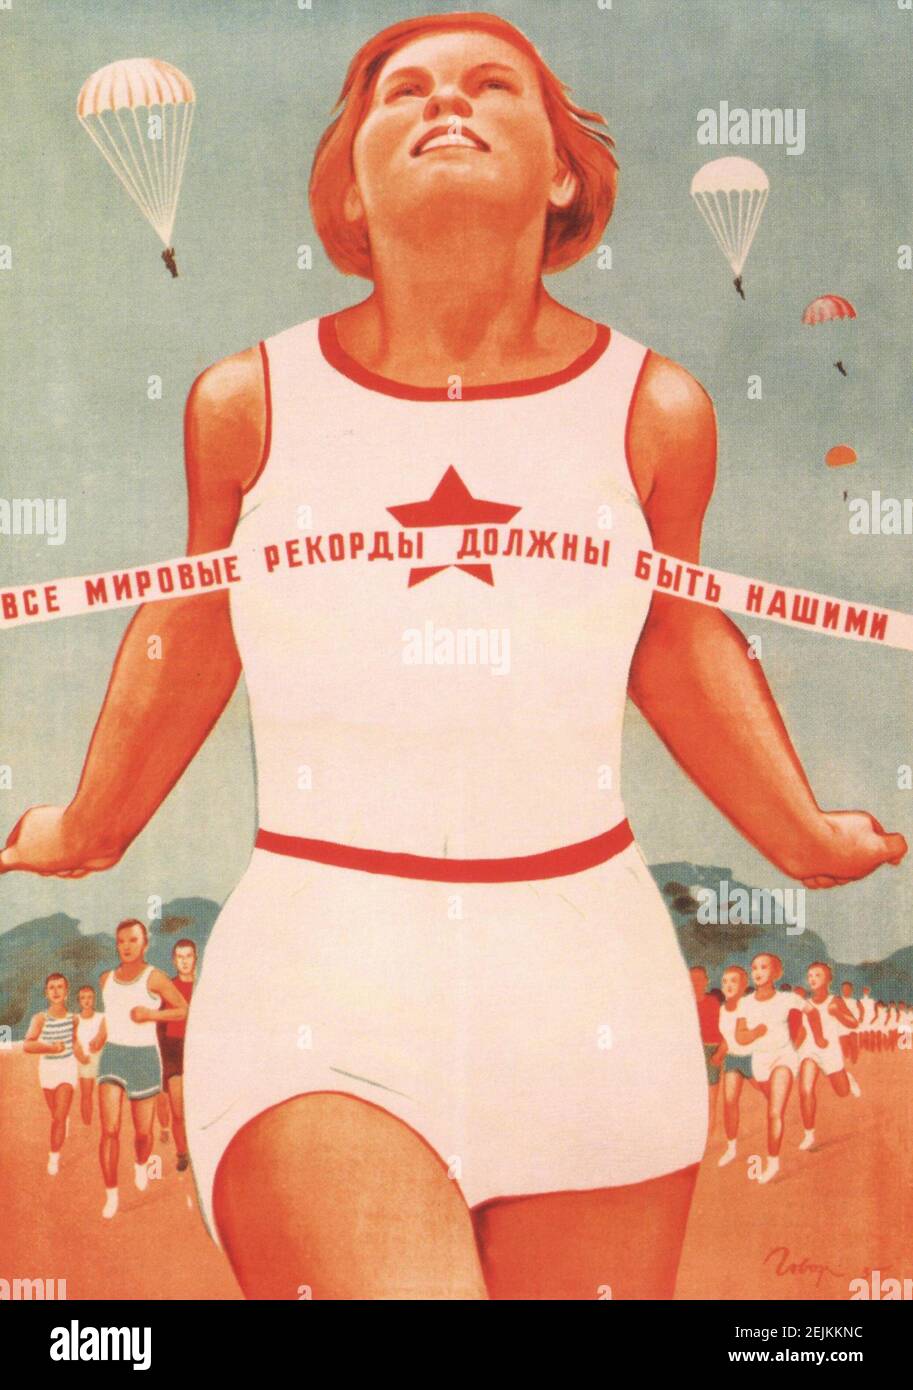 Sowjetisches Plakat "Alle Weltrekorde sollten uns gehören!" Stockfoto